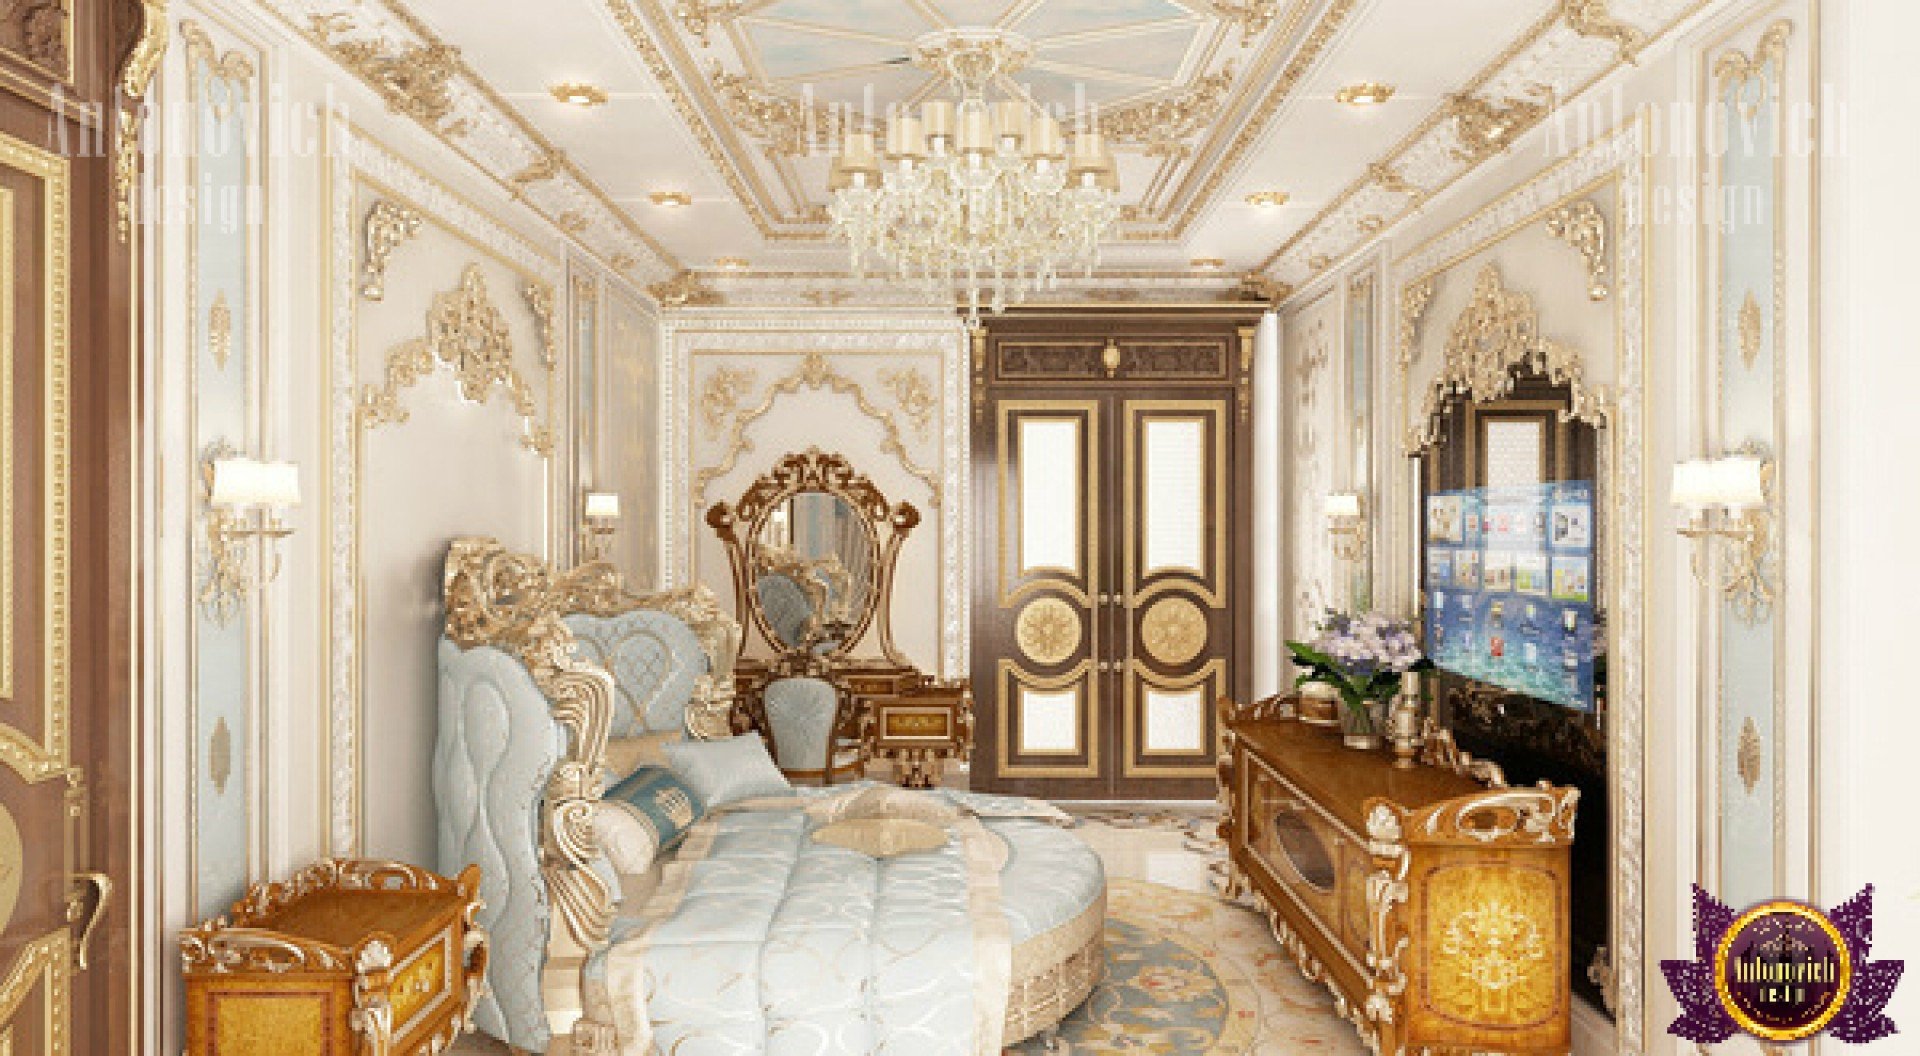 Luxurious UAE bedroom with plush bedding and stylish decor